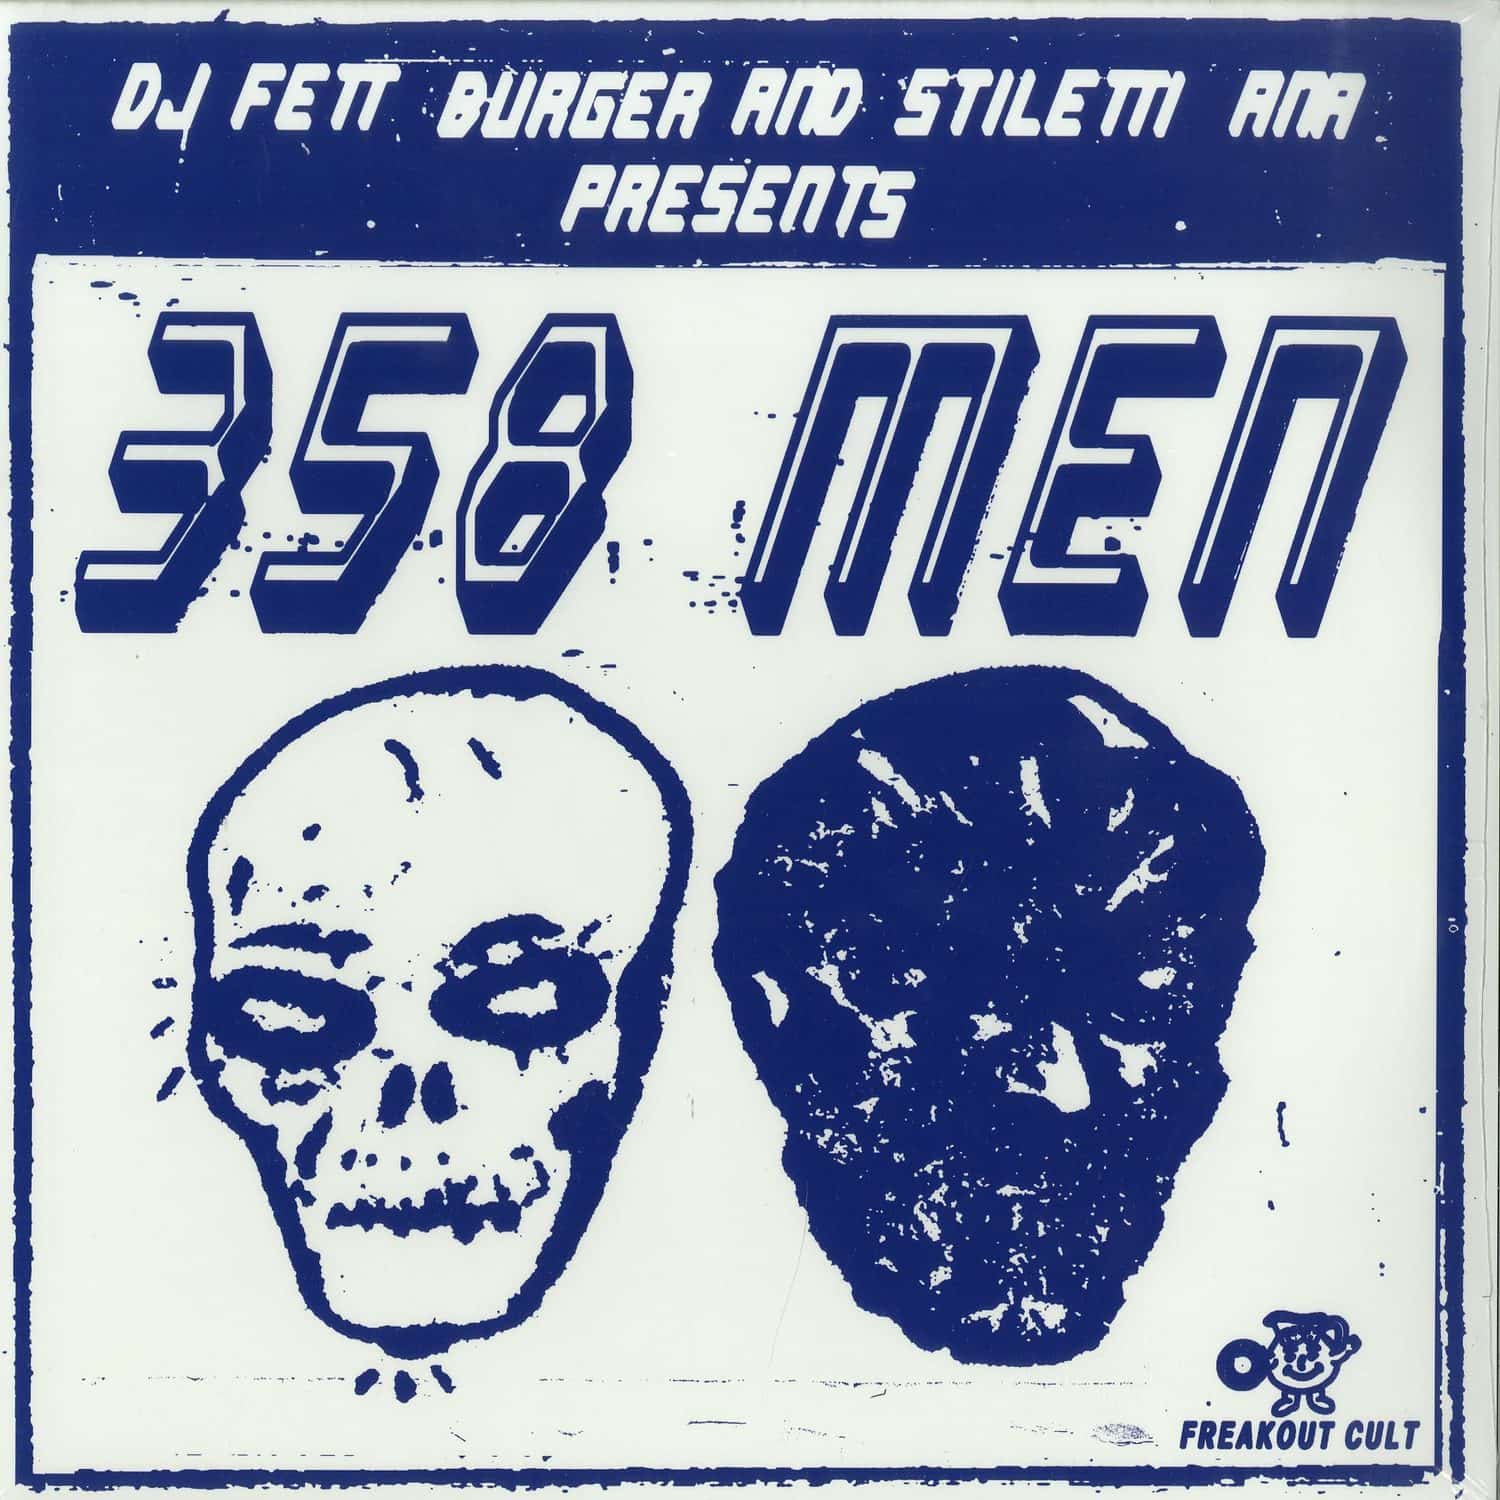 DJ Fett Burger and Stiletti Ana - 358 MEN 